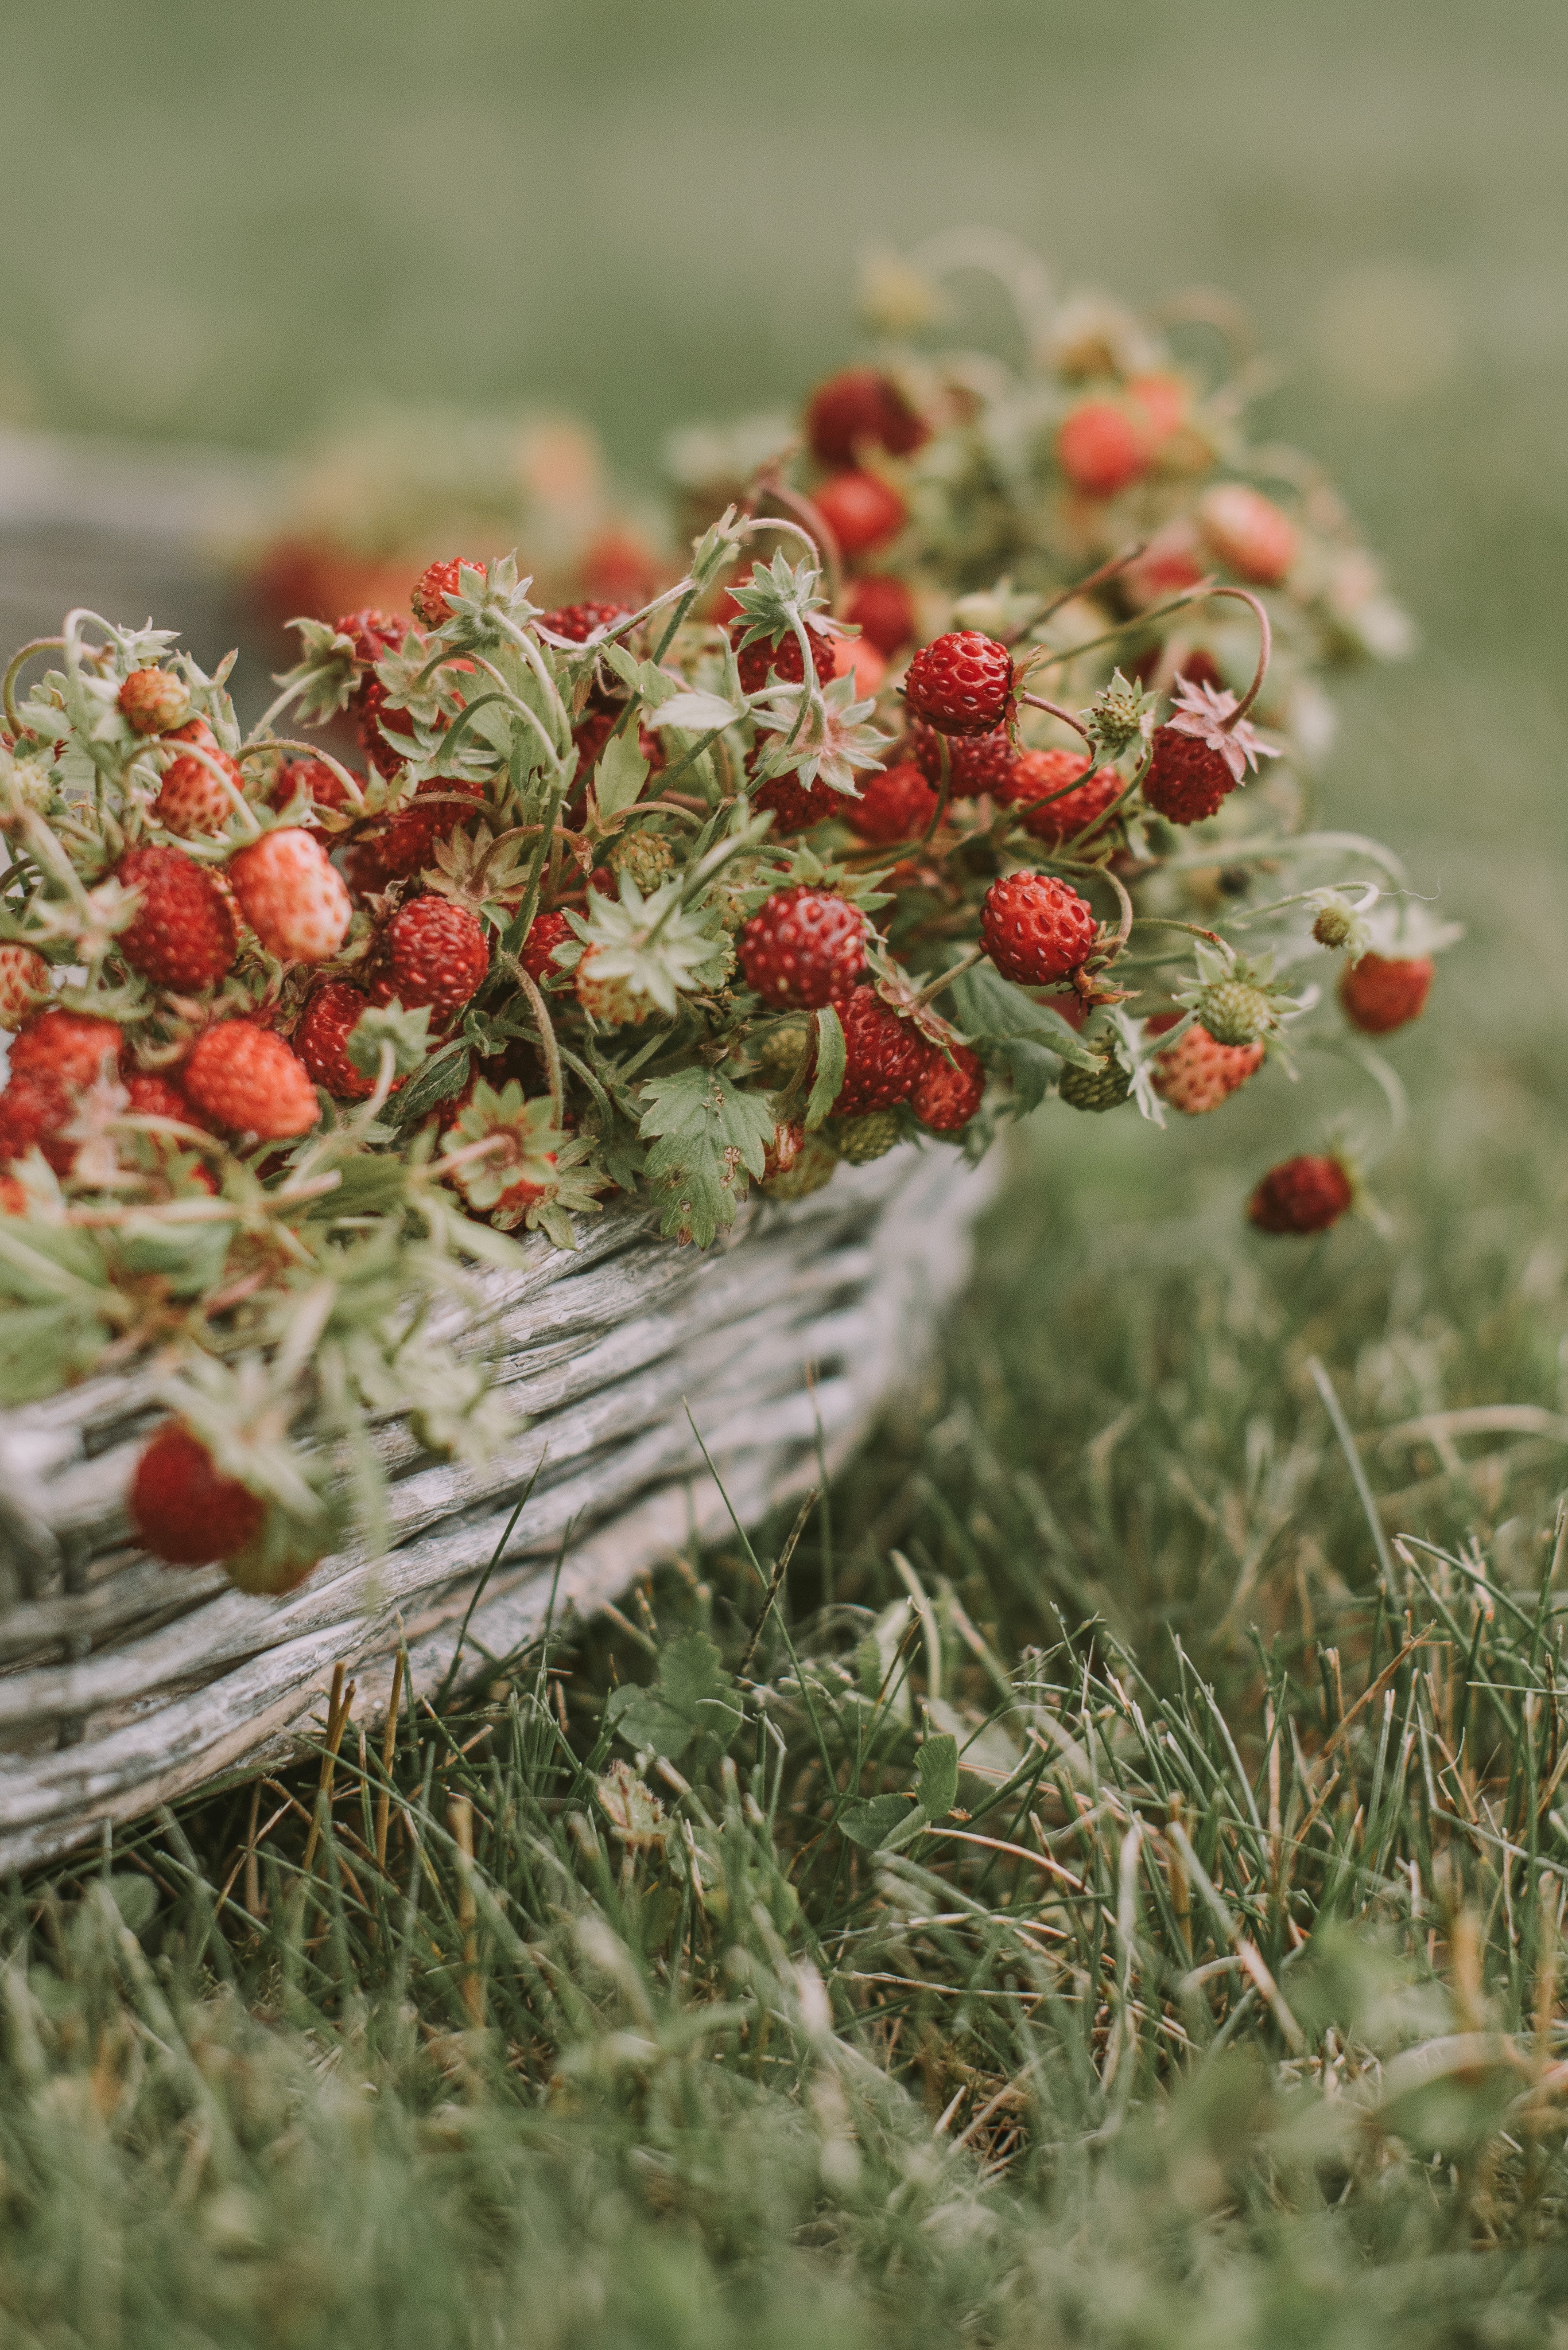 food, strawberry, grass, berries, basket, ripe, wild strawberries